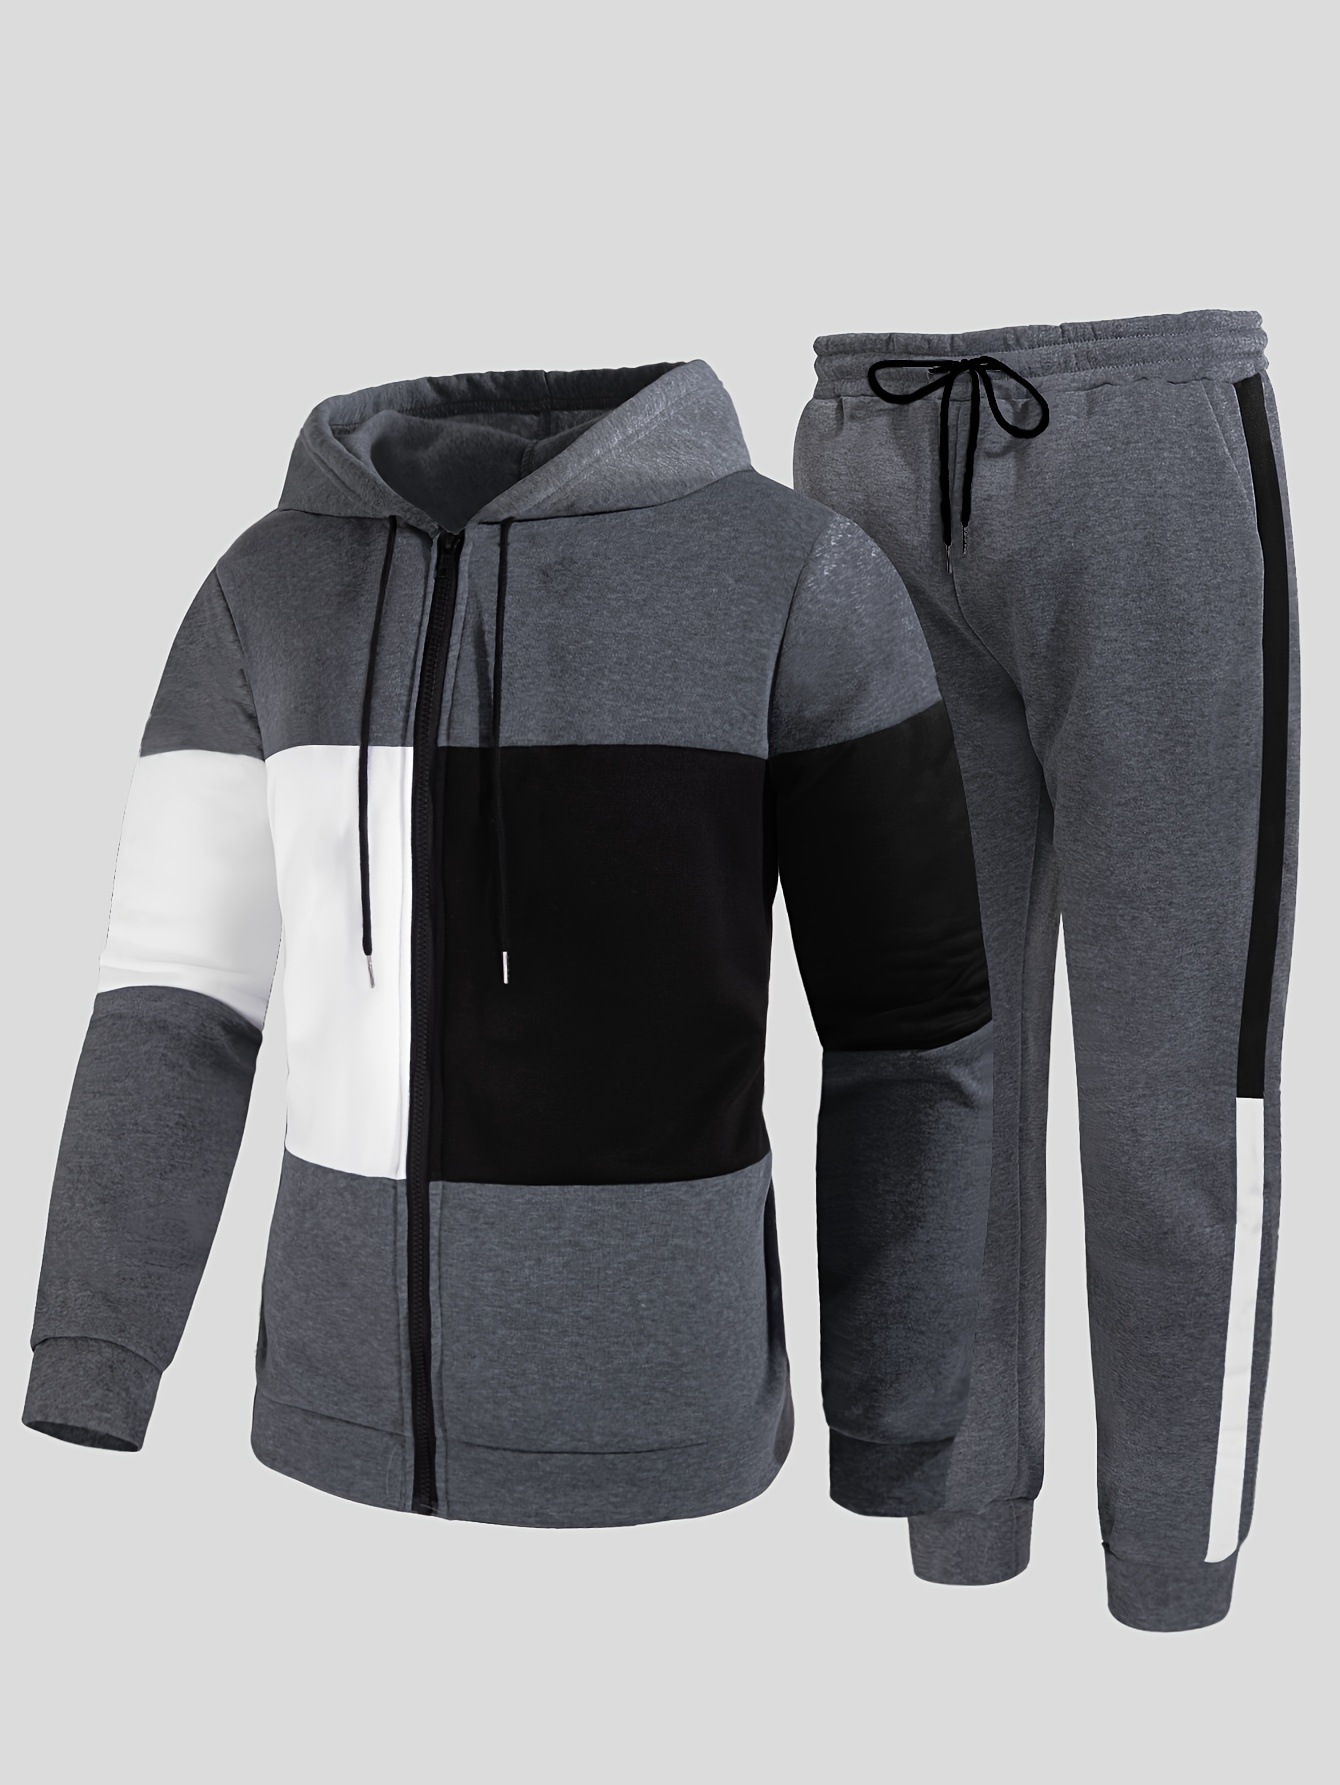 Mens Tracksuit 2 Pcs Athletic Sweatsuits Casual Running Jogging Sport Suit  Sets